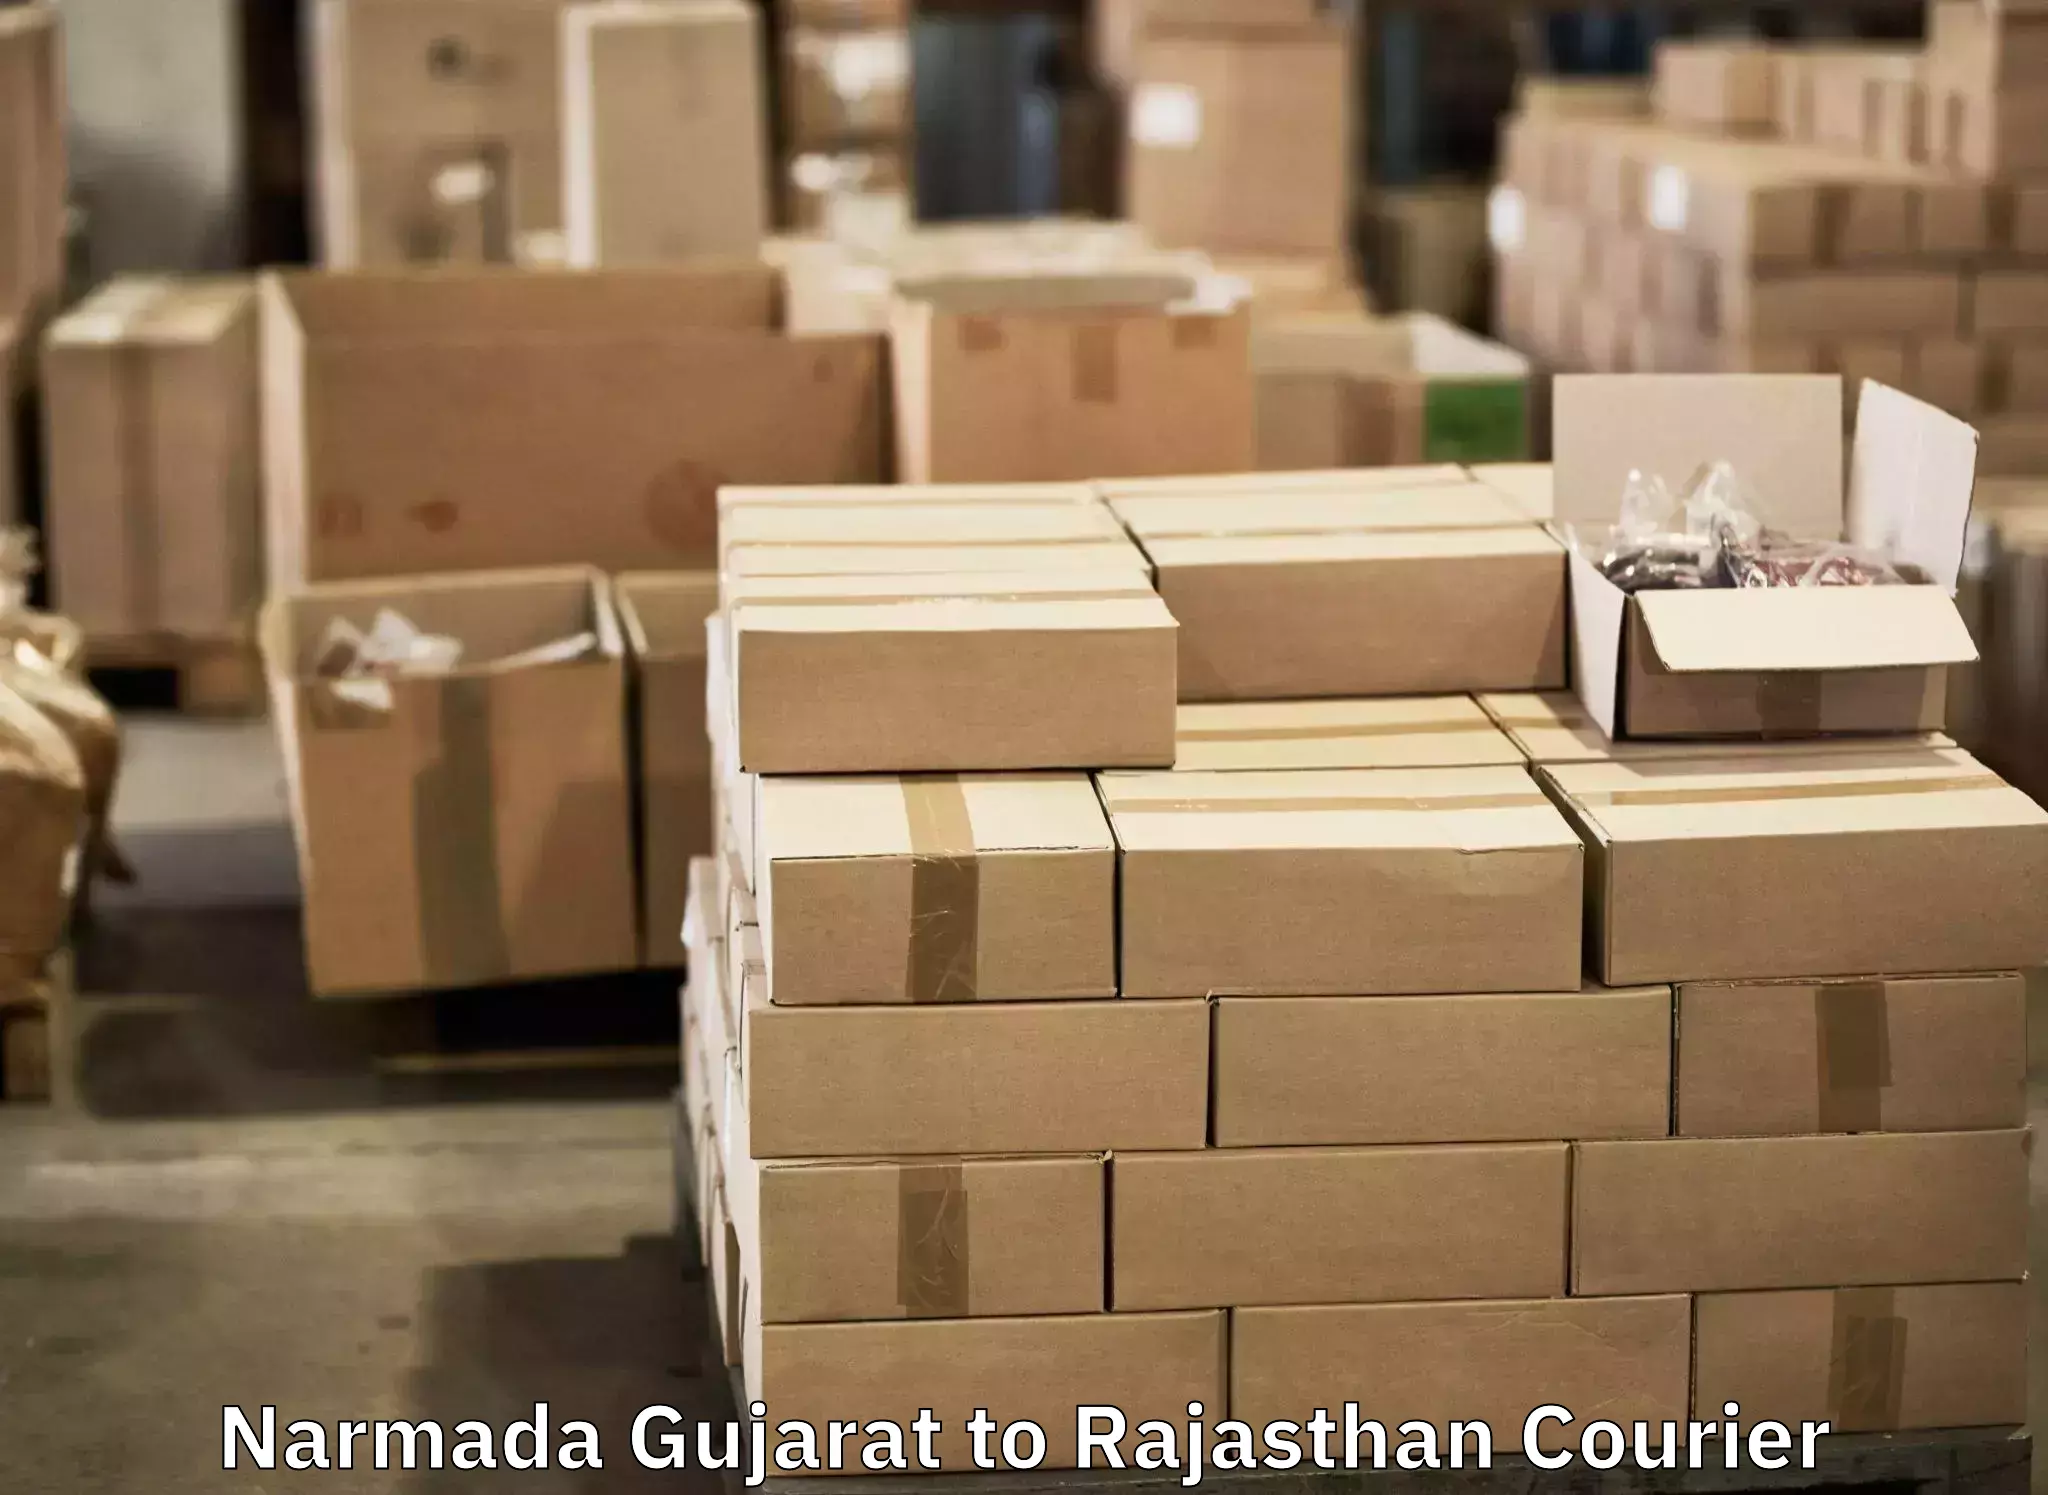 Same day luggage service Narmada Gujarat to Jodhpur